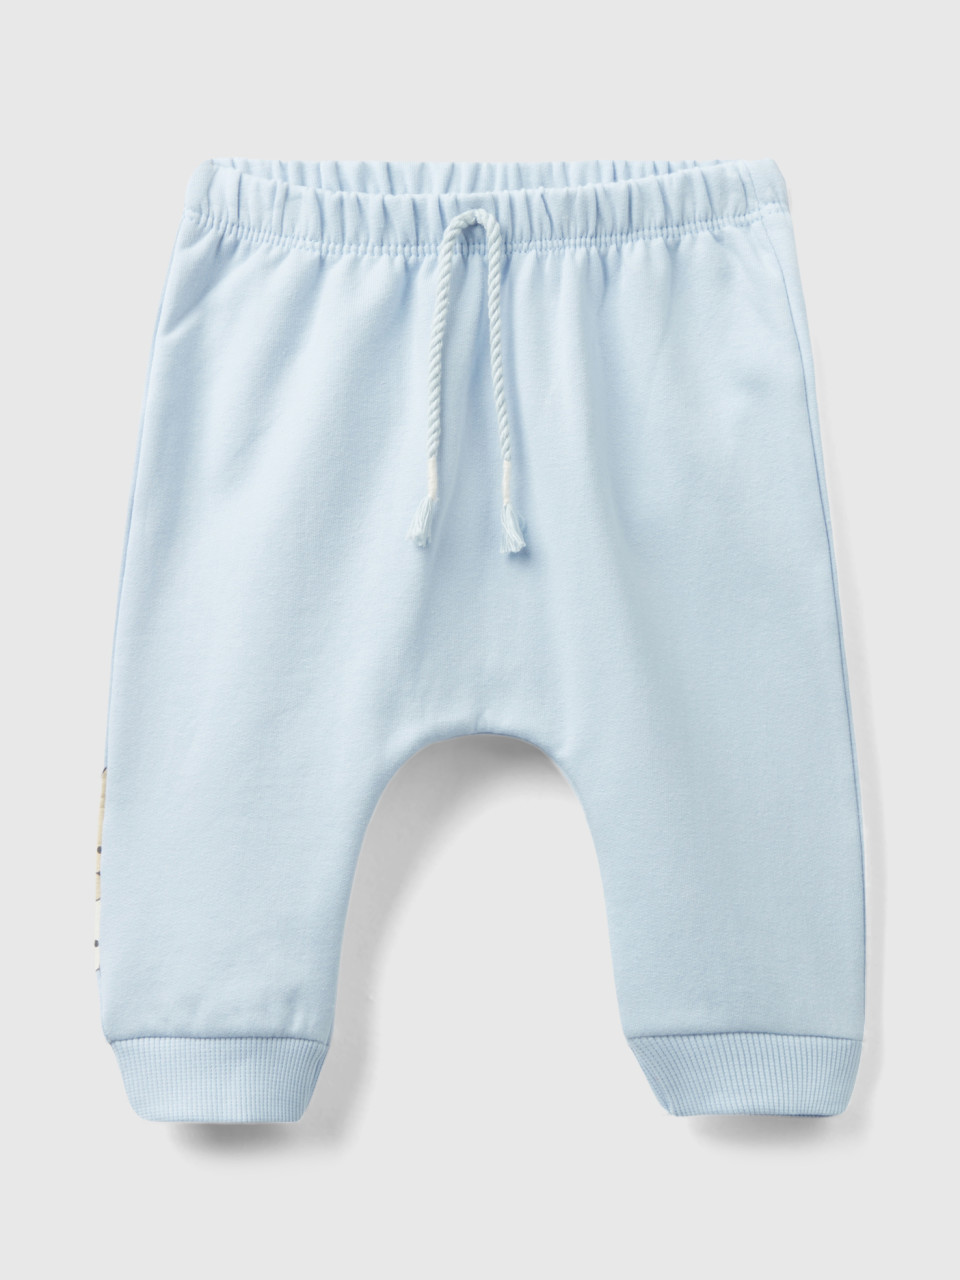 Benetton, Pantalon En Molleton Chaud À Petite Poche, Bleu Ciel, Enfants